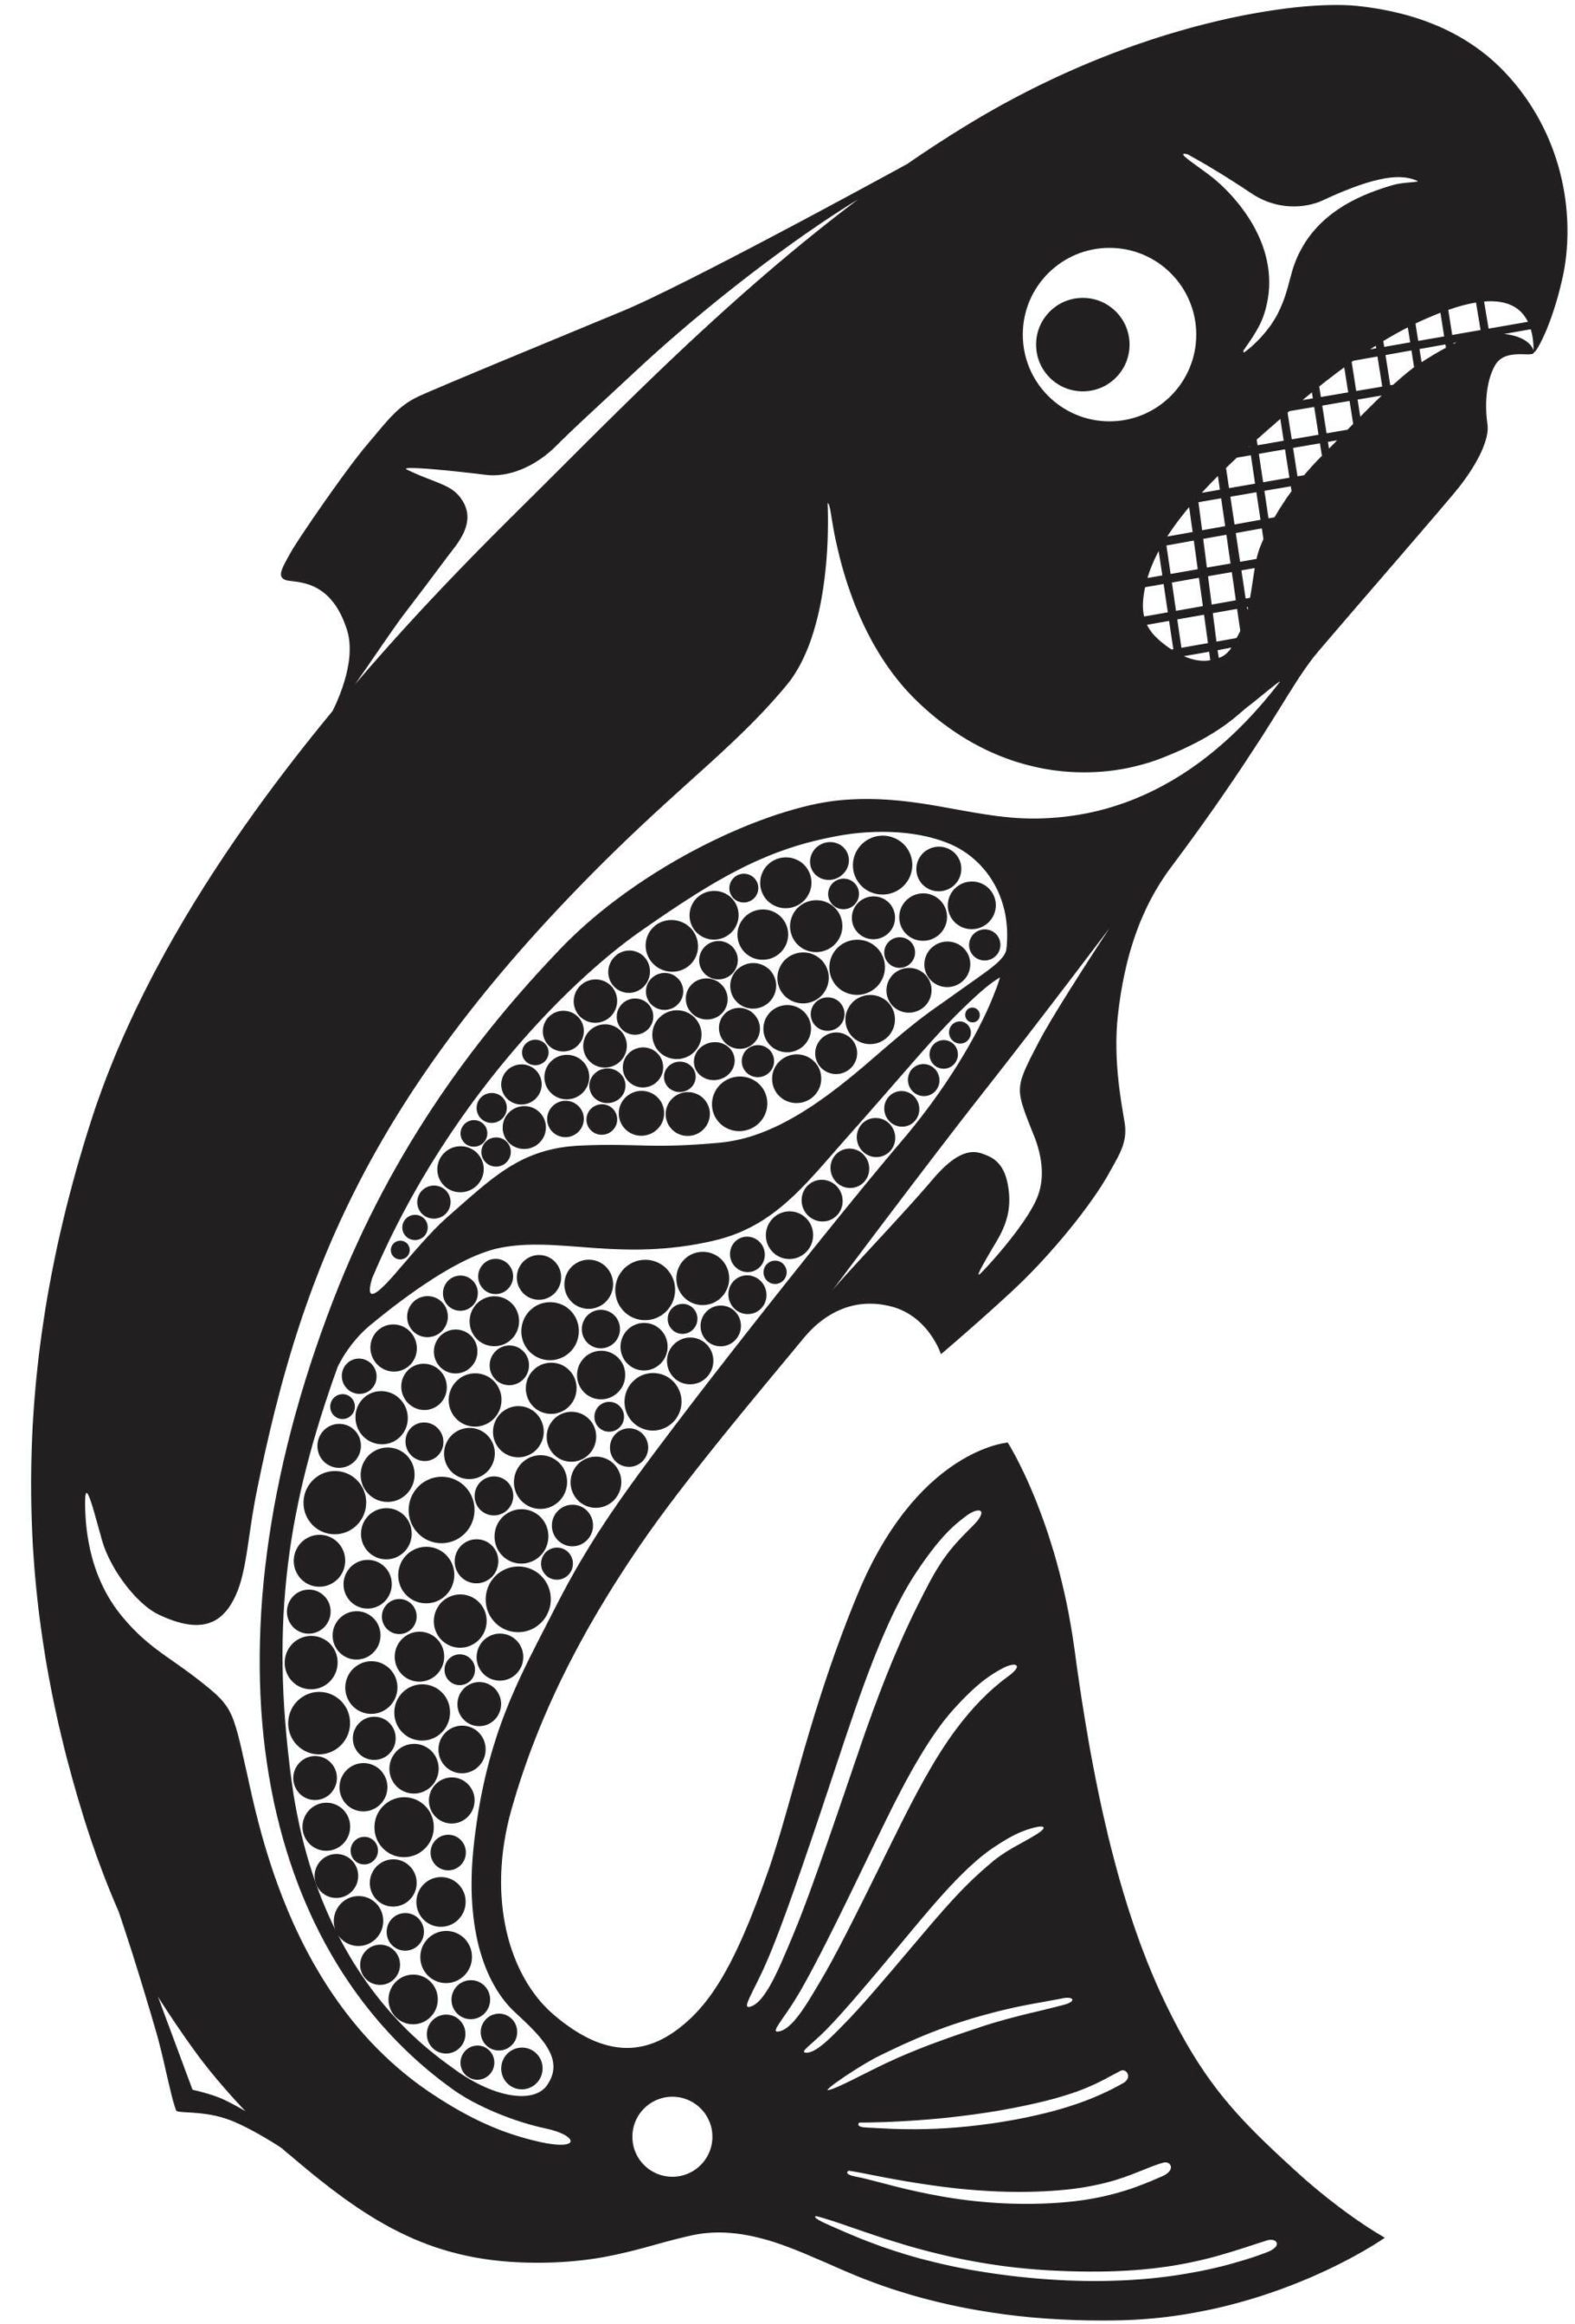 Mary Goddard formline salmon art. (Courtesy Image / Mary Goddard)